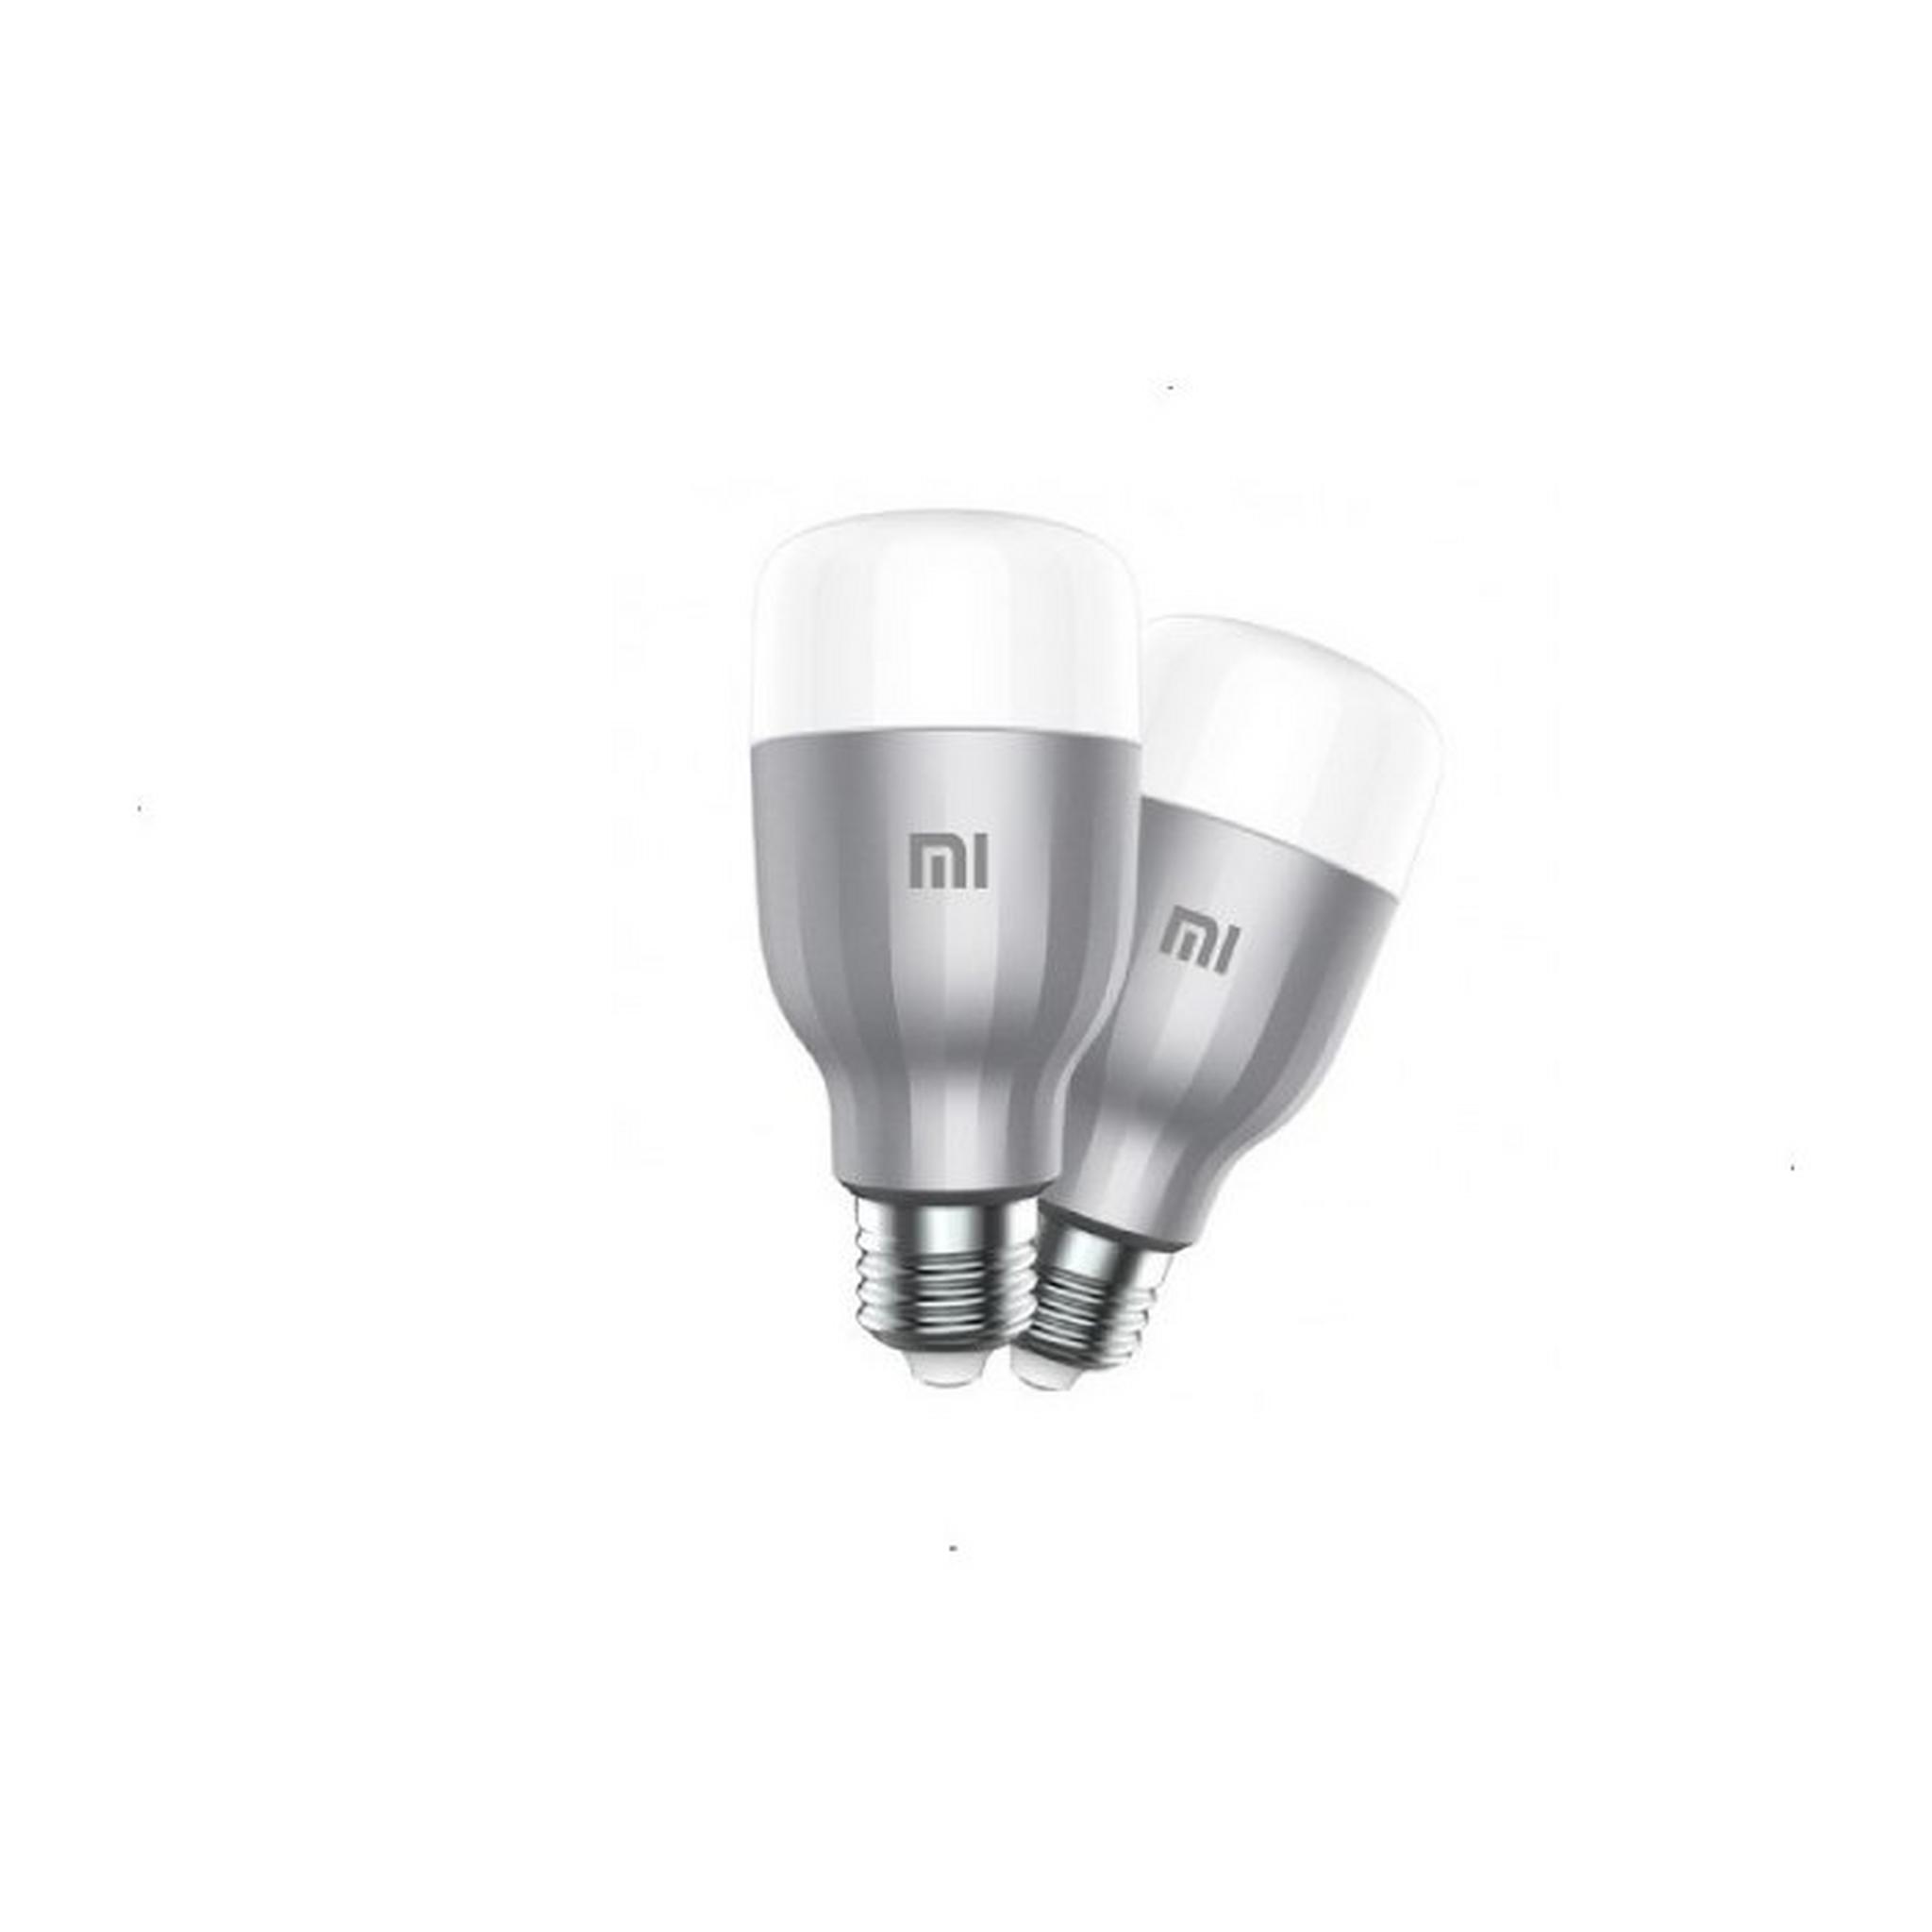 XiaoMi Yeelight LED Smart Light Bulb RGBW – (2 Pack)